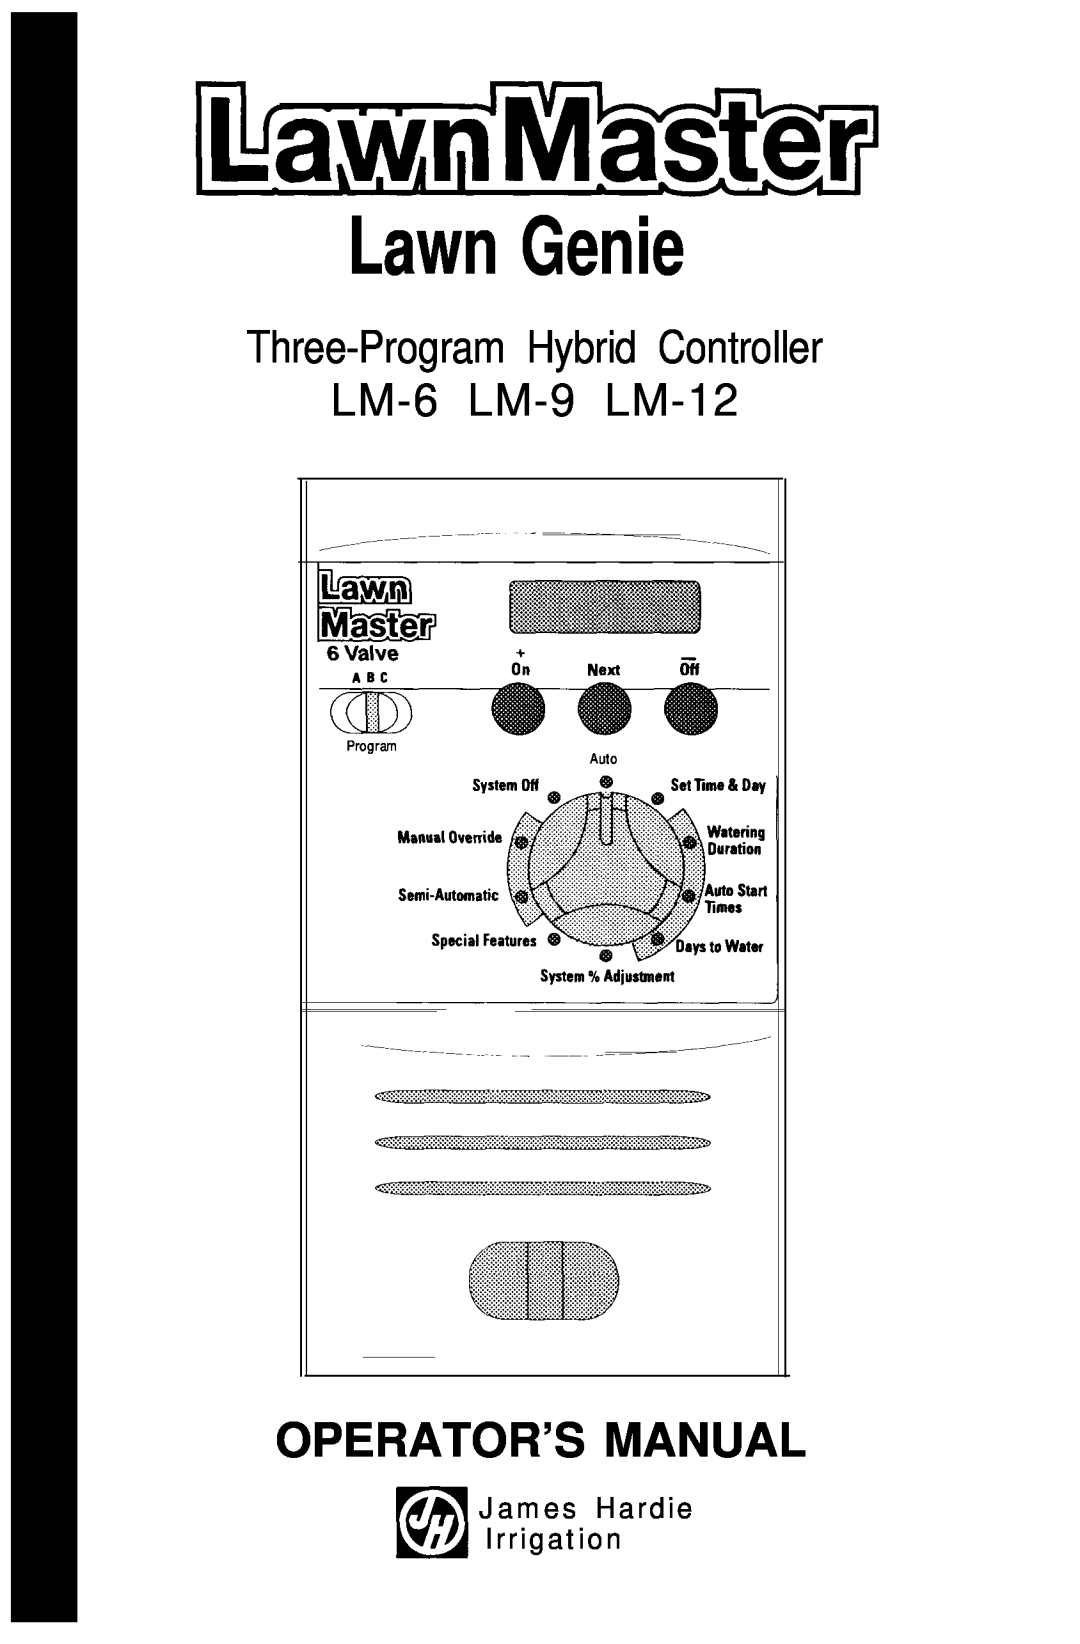 Genie manual James Hardie Irrigation, Lawn Genie, Operator’S Manual, Three-ProgramHybrid Controller LM-6 LM-9 LM-12 